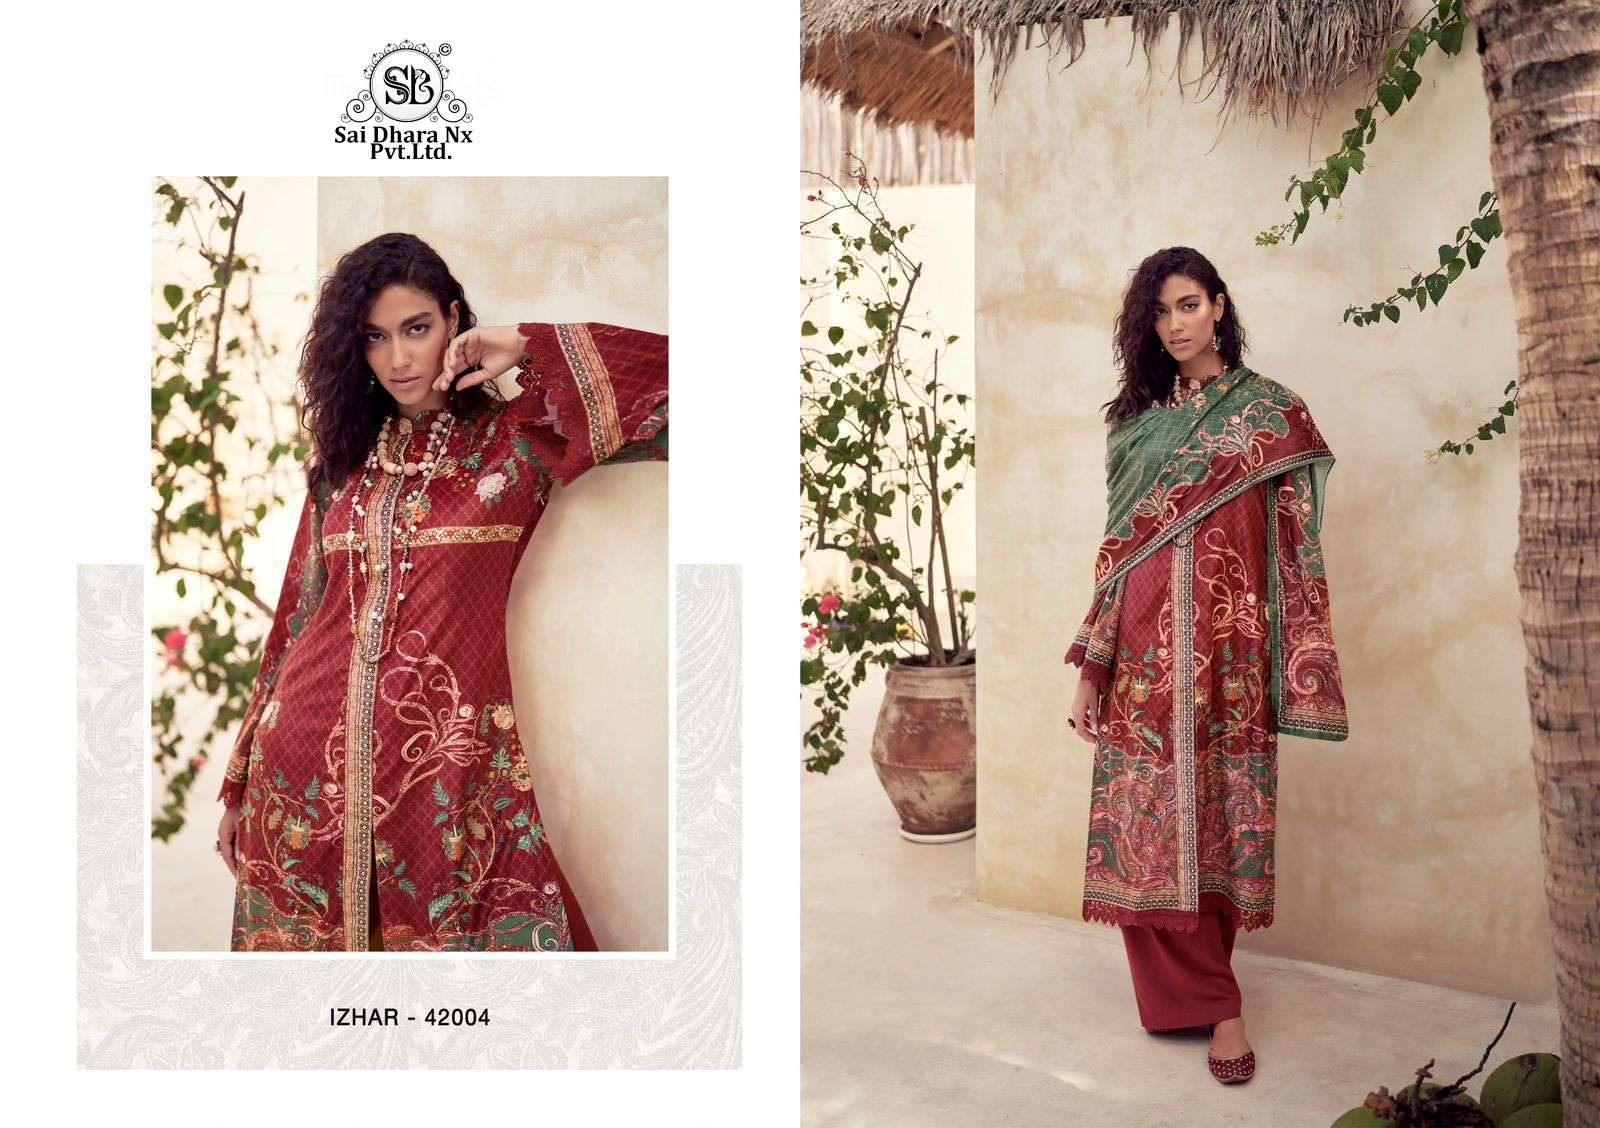 mumtaz art presents the velvet hub pakistani suit wholesale shop in surat - SaiDharaNx